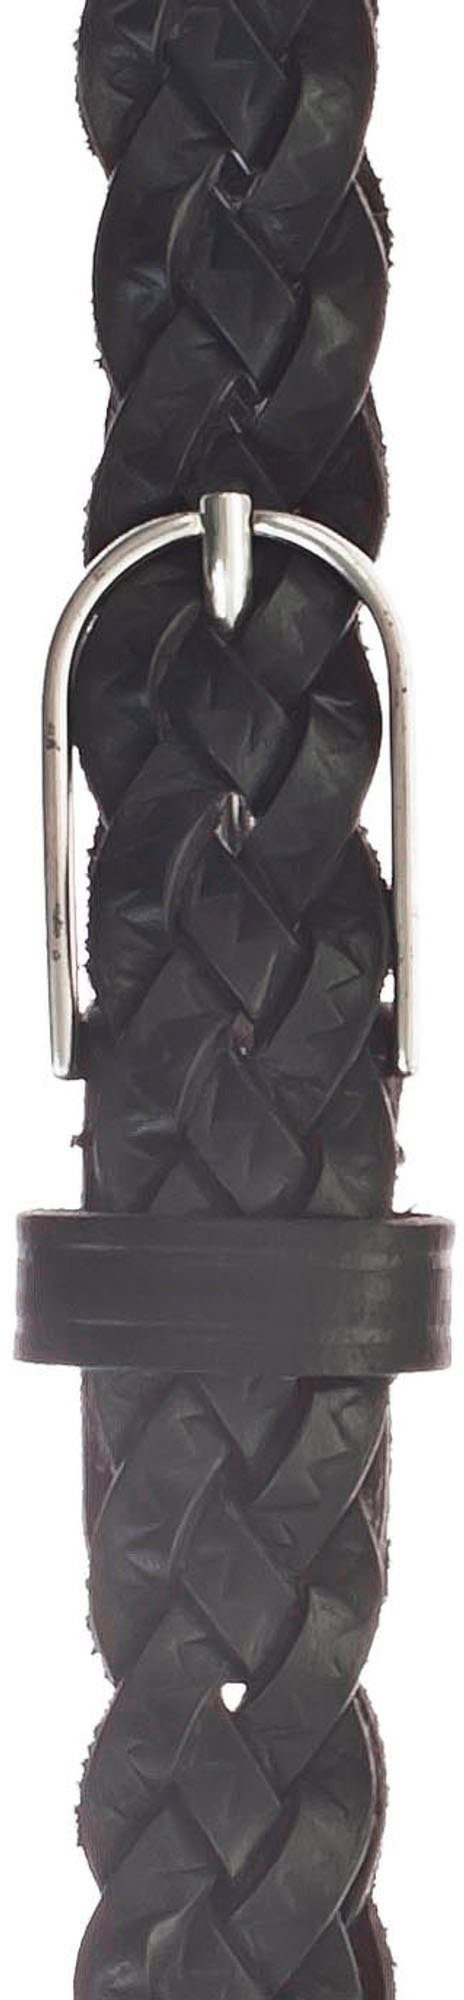 Vanzetti Flechtgürtel Ledergürtel bis Gr, 140 cm, schwarz Curvy